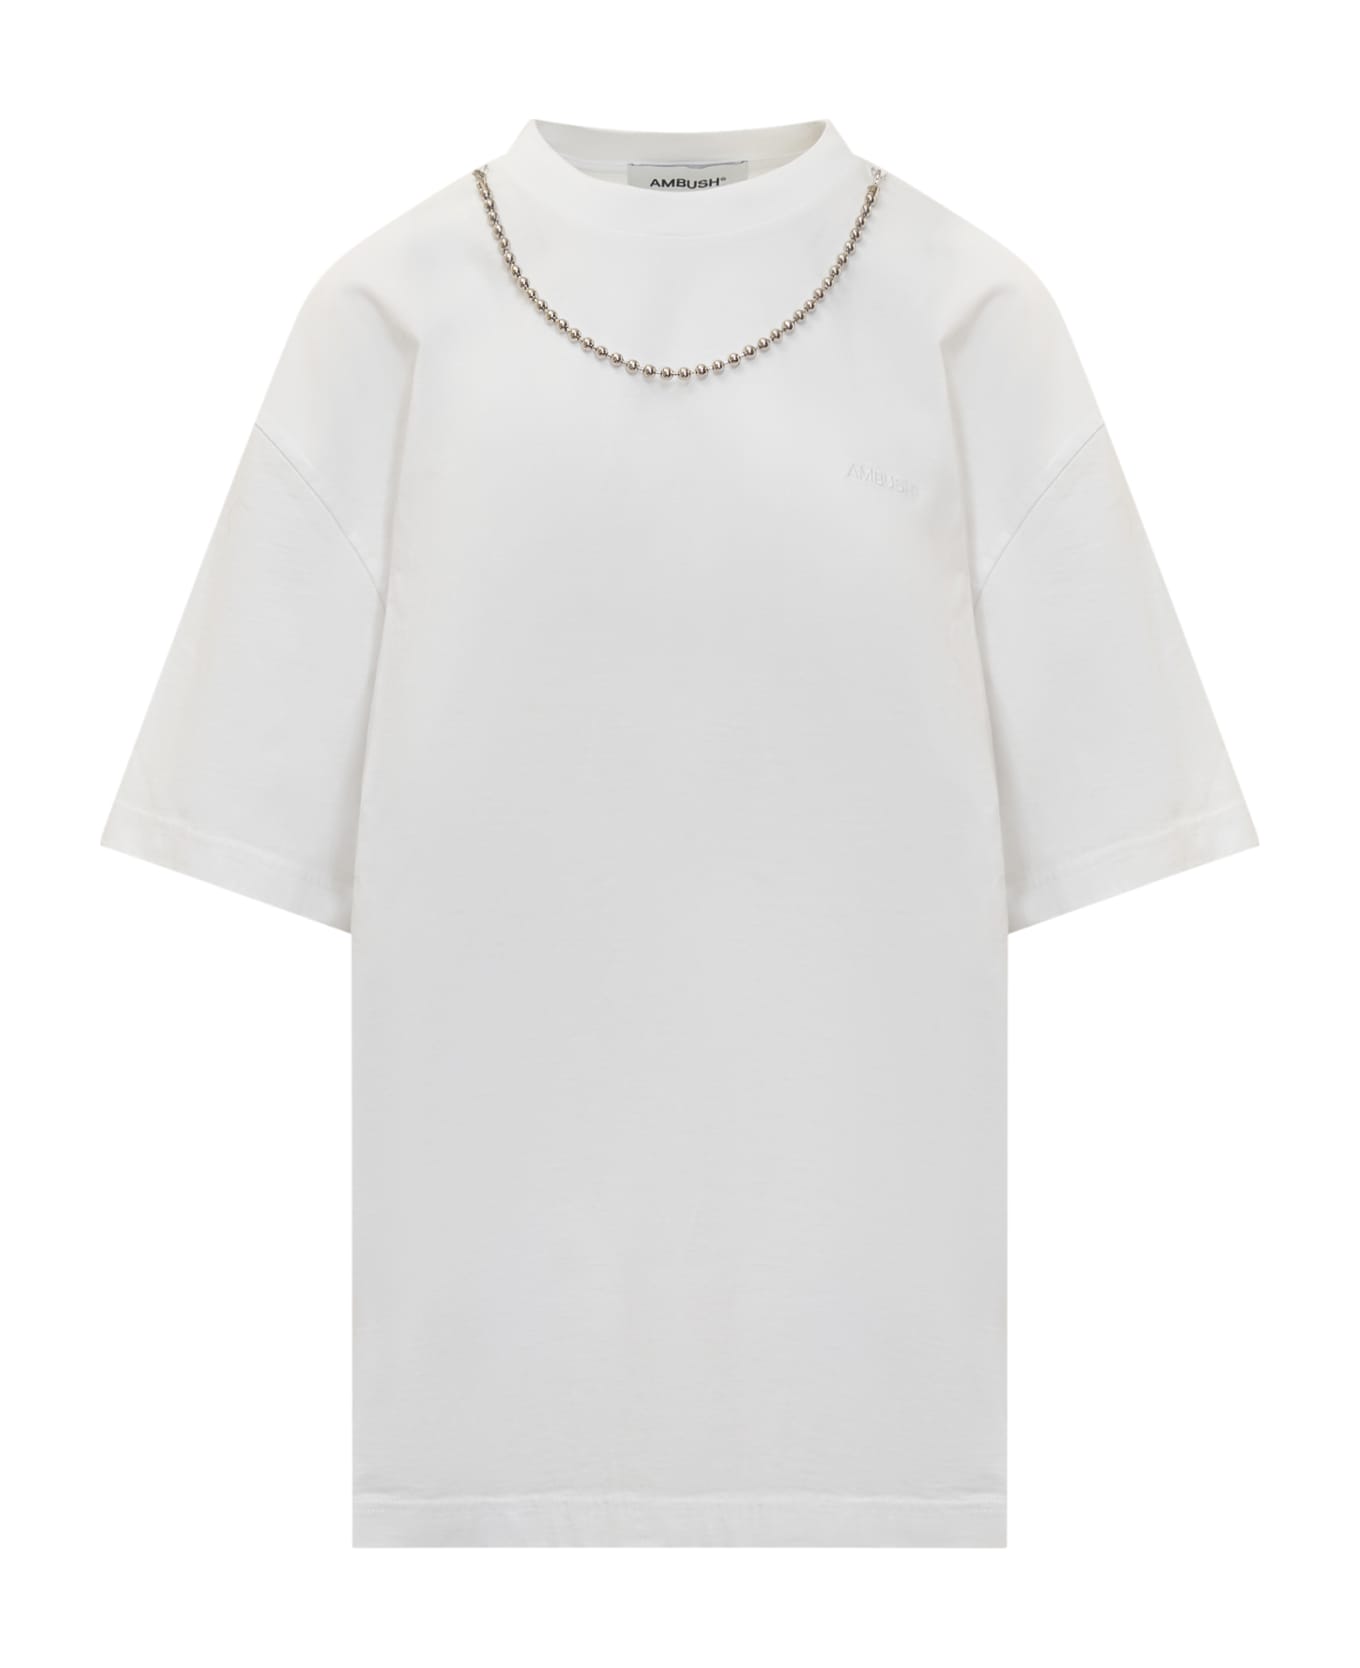 AMBUSH Ball Chain T-shirt - BLANC DE BLANC Tシャツ